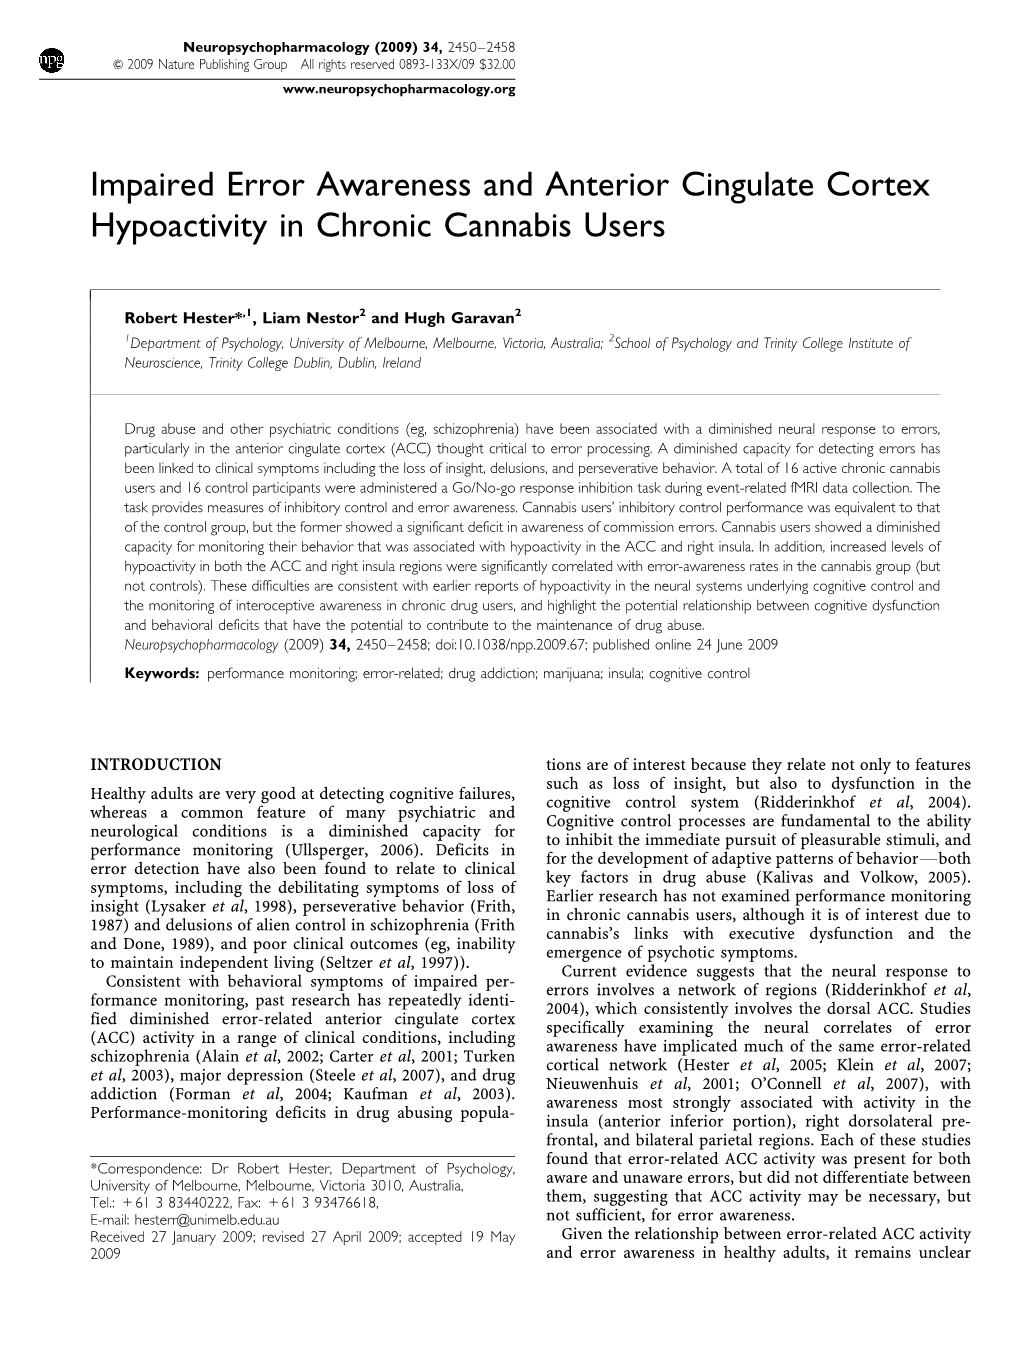 Impaired Error Awareness and Anterior Cingulate Cortex Hypoactivity in Chronic Cannabis Users